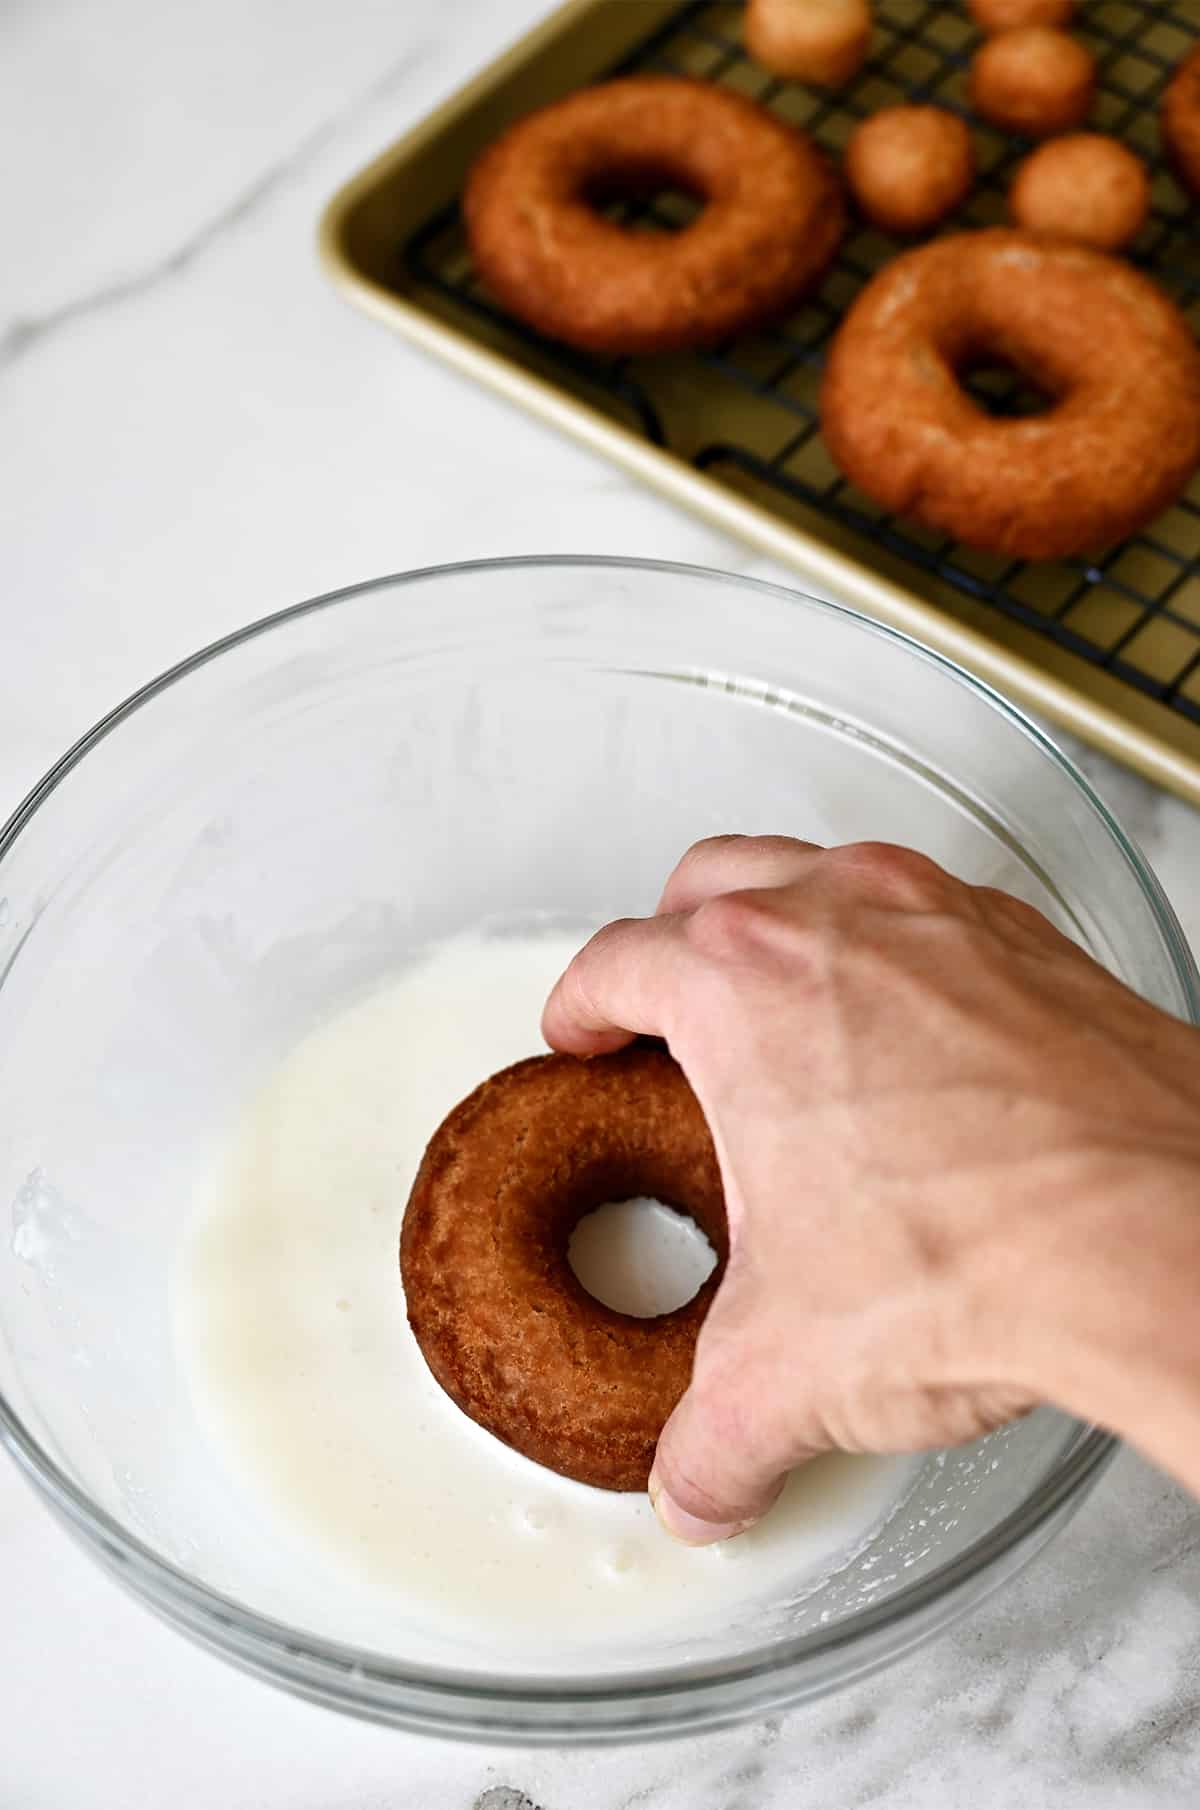 A hand holding a doughnut dips it into bowl with a homemade vanilla glaze. 